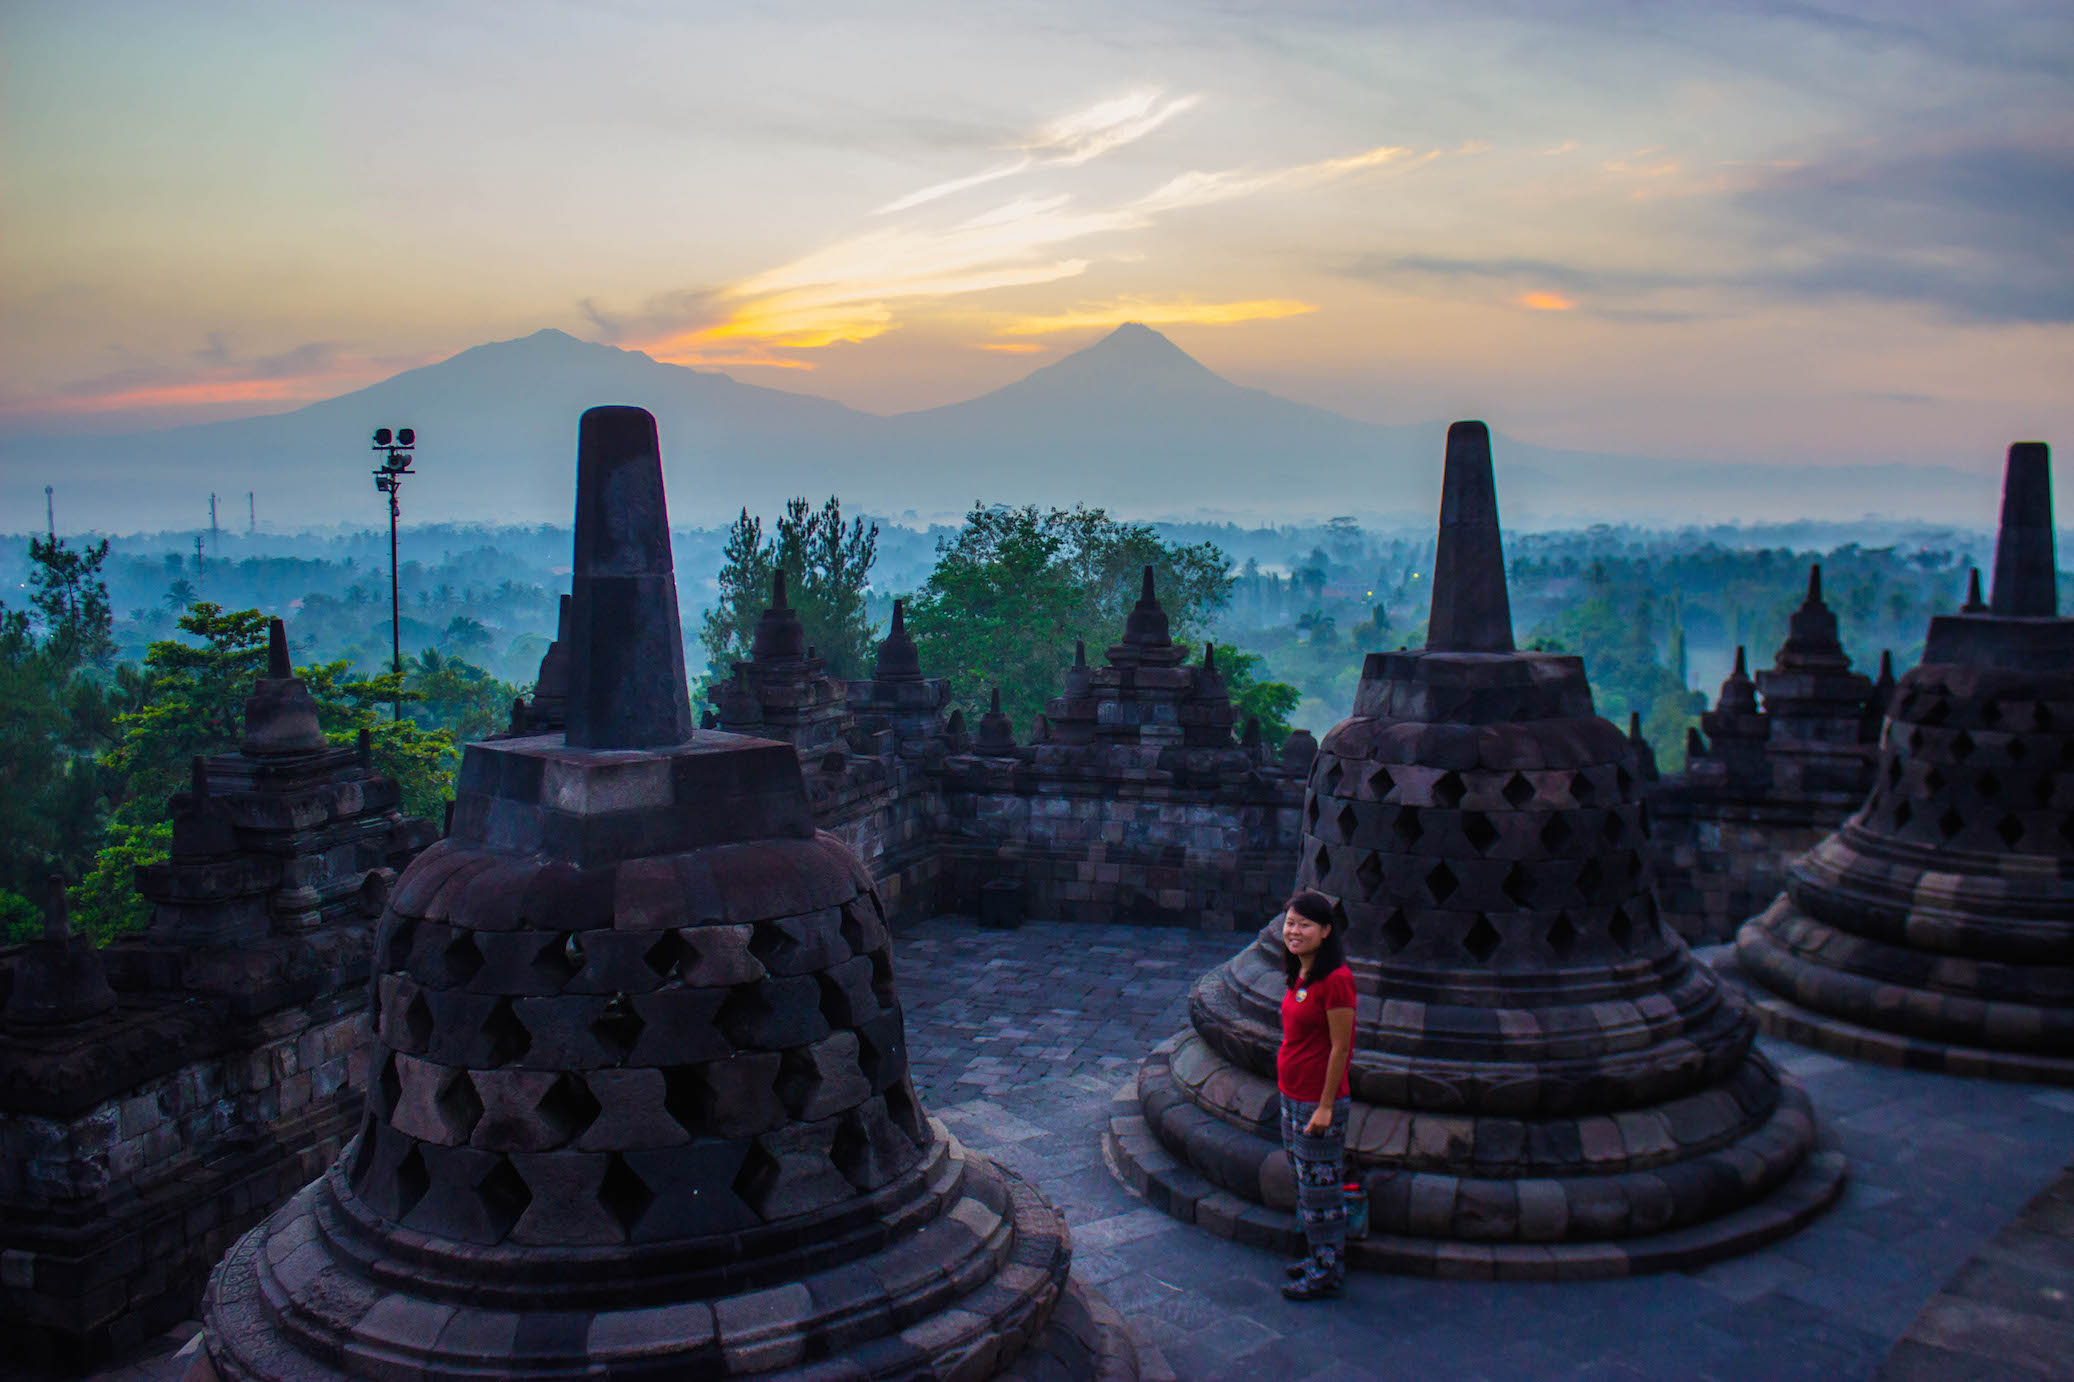 Julie and the sunrise over Borobudur, Indonesia